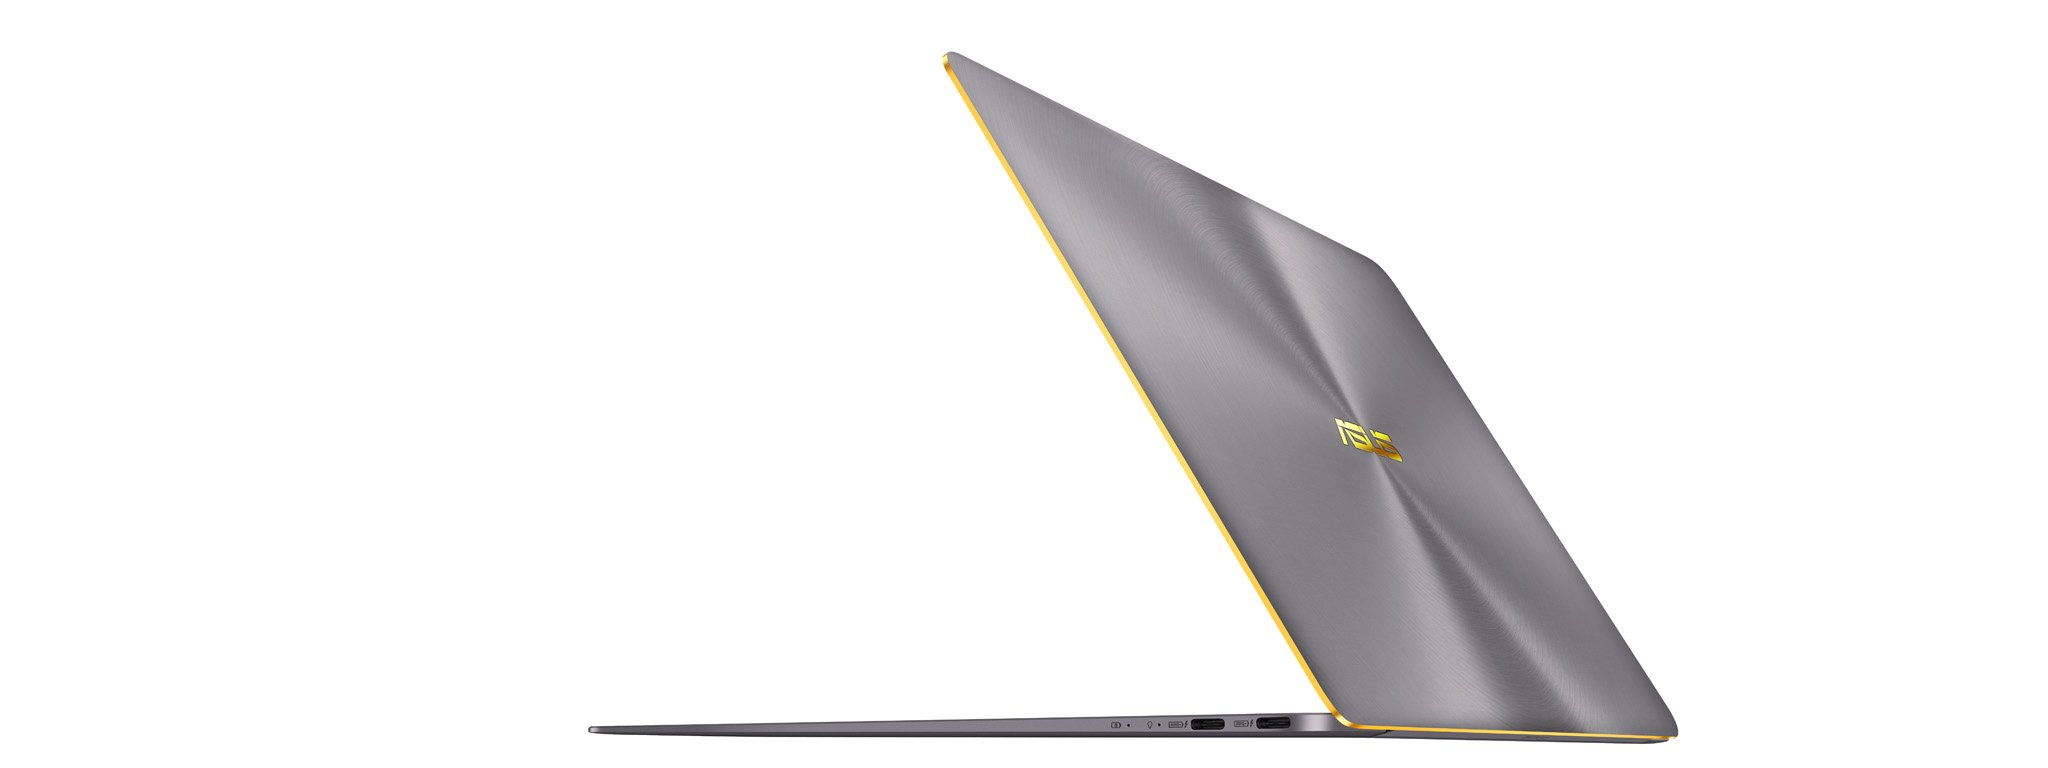 [Computex 2017] ASUS ZenBook 3 Deluxe mới (UX490): CPU Kaby-Lake, 14" 1080p, giá từ 1.199 USD